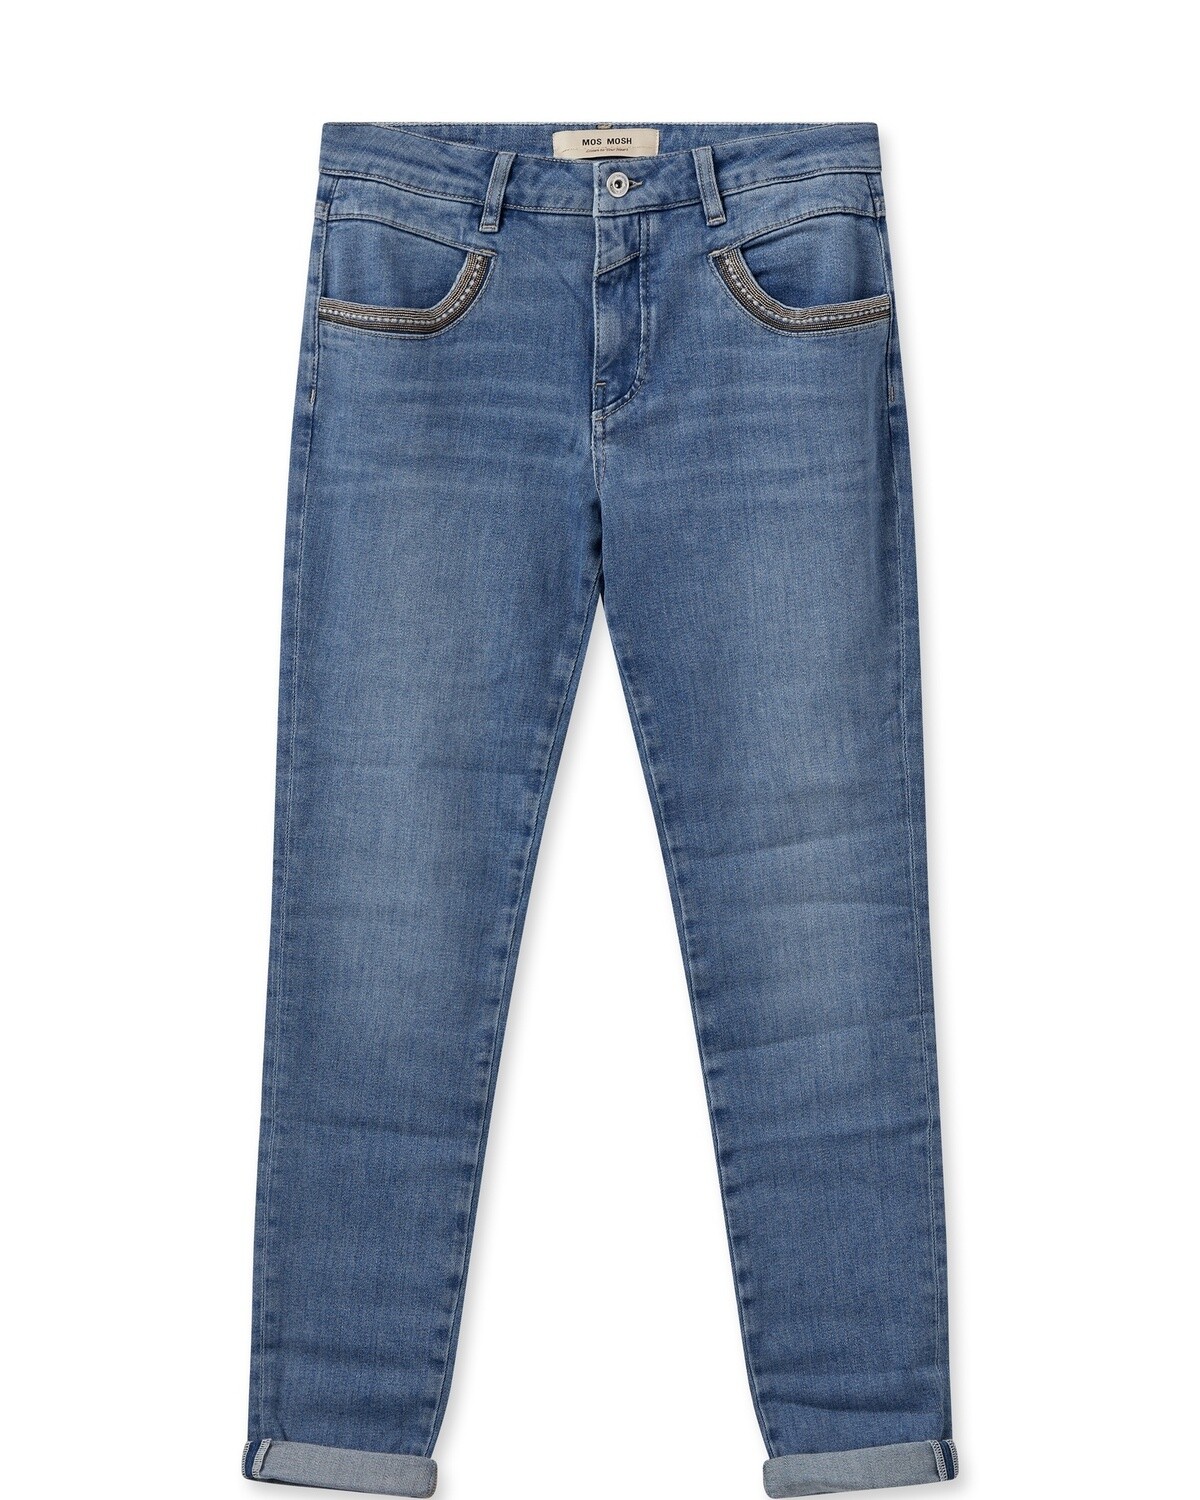 MOS MOSH Jeans Naomi Nion Spring 161750, Colour: Blue, Size: 26